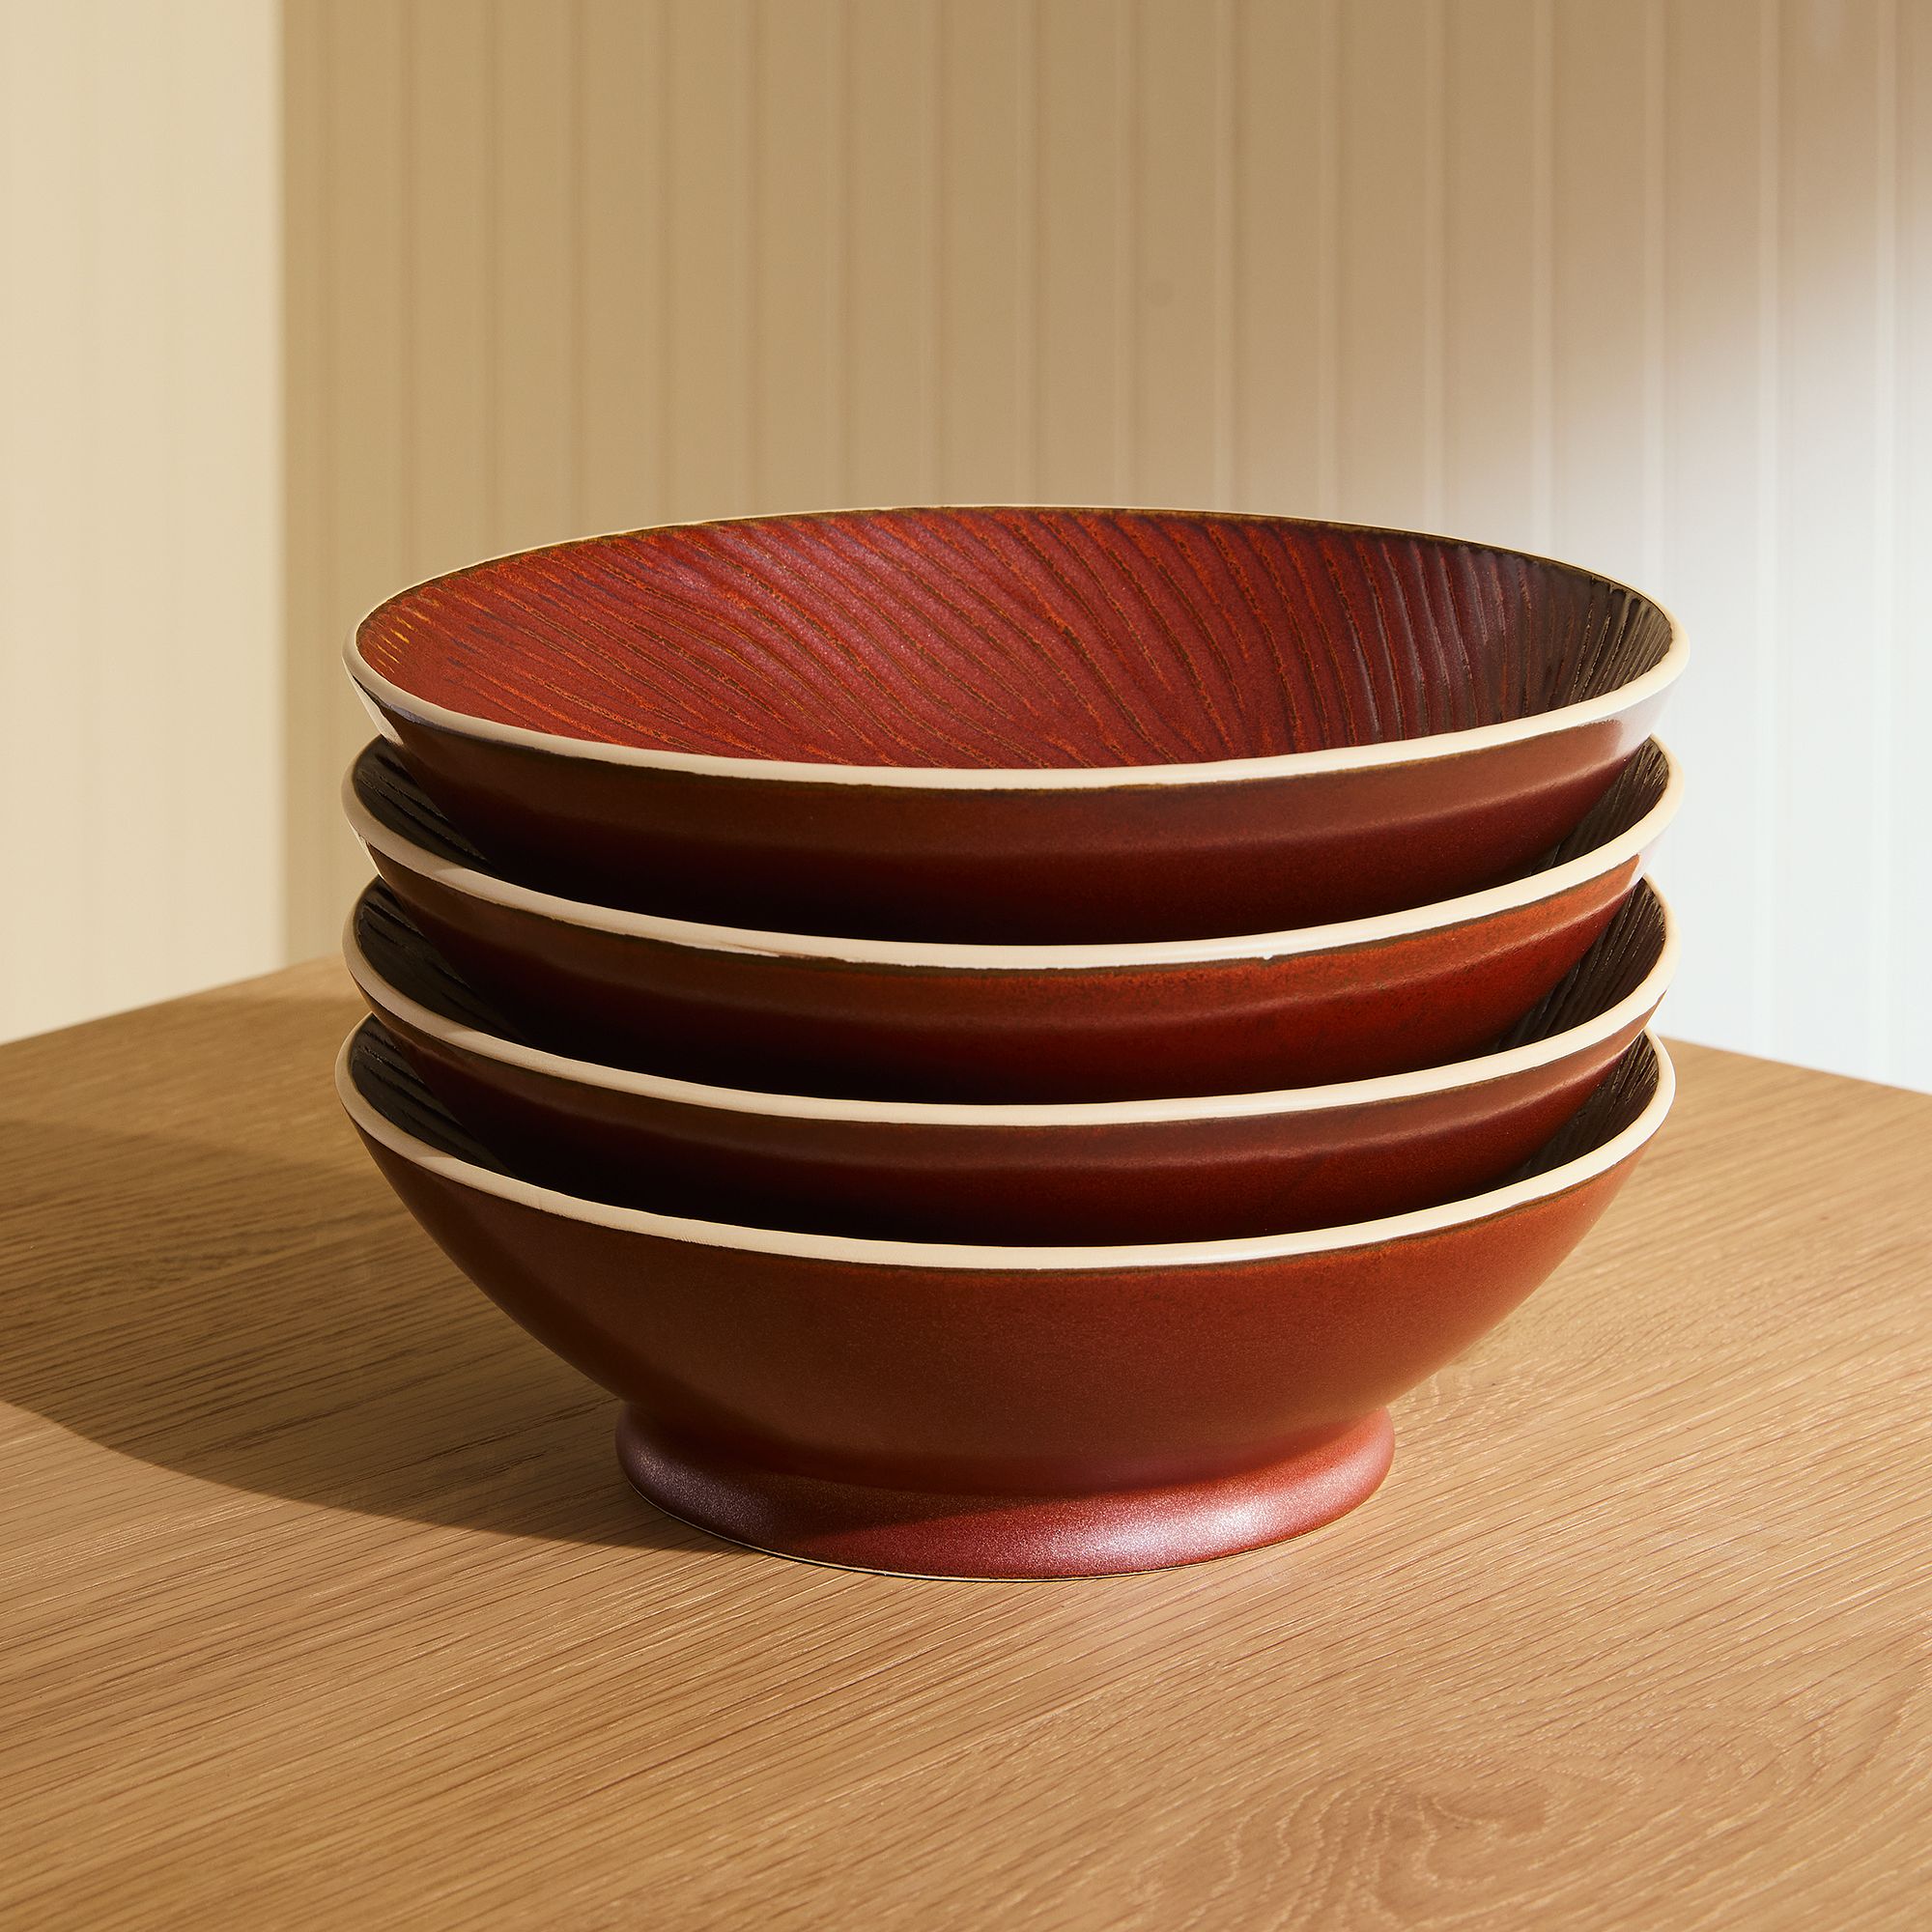 Marcus Samuelsson Carved Pattern Pasta Bowl Sets | West Elm